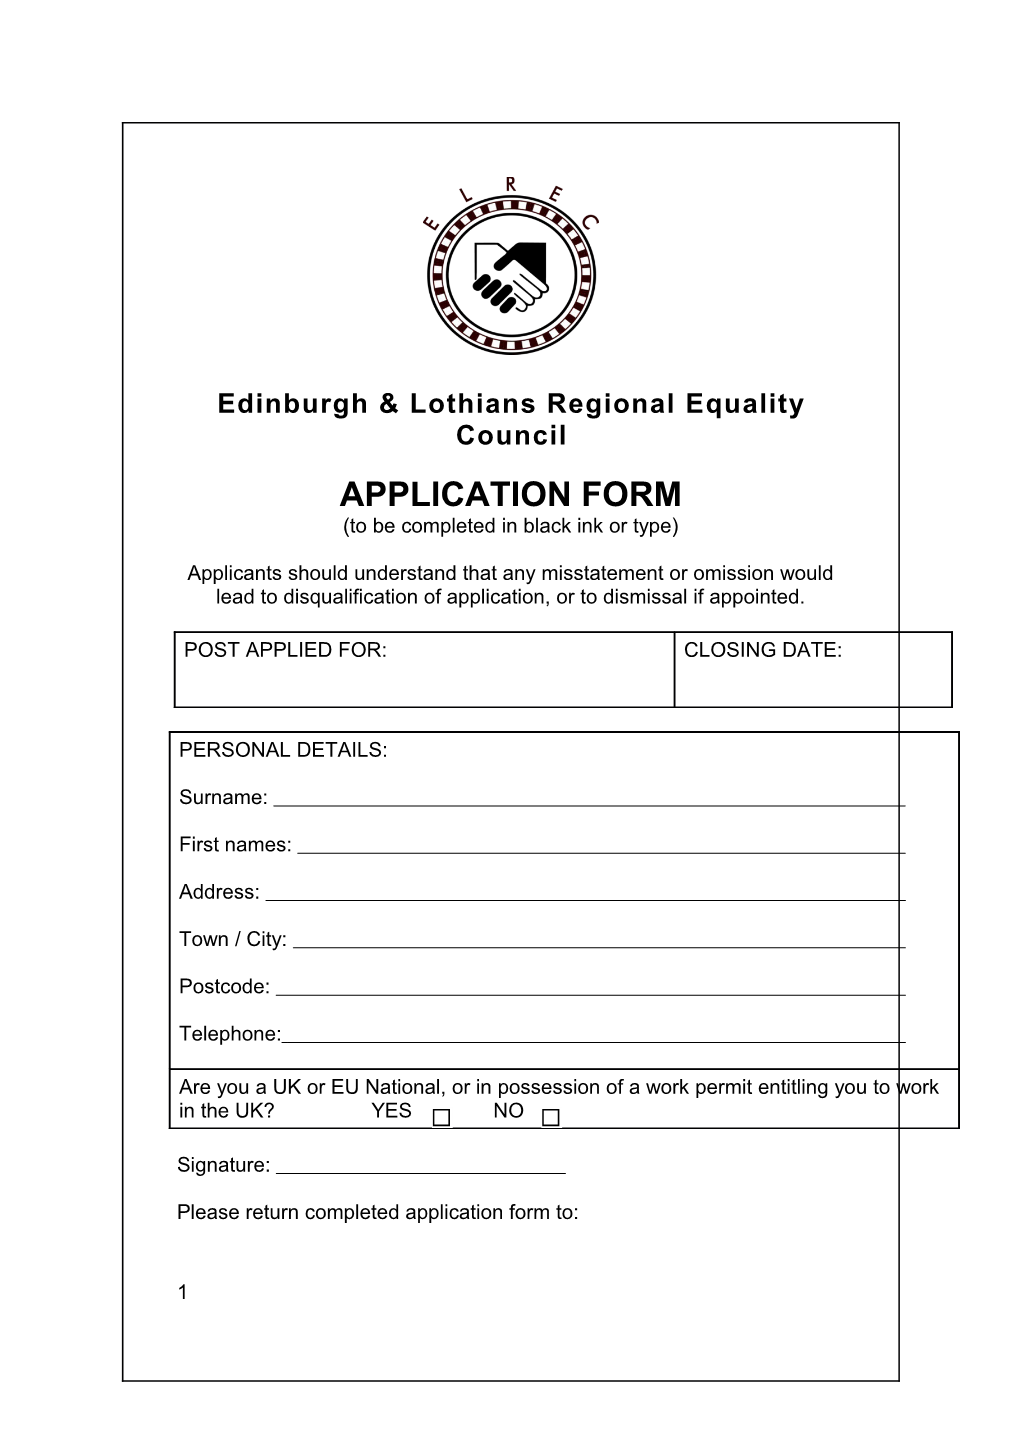 Edinburgh & Lothians Regional Equality Council